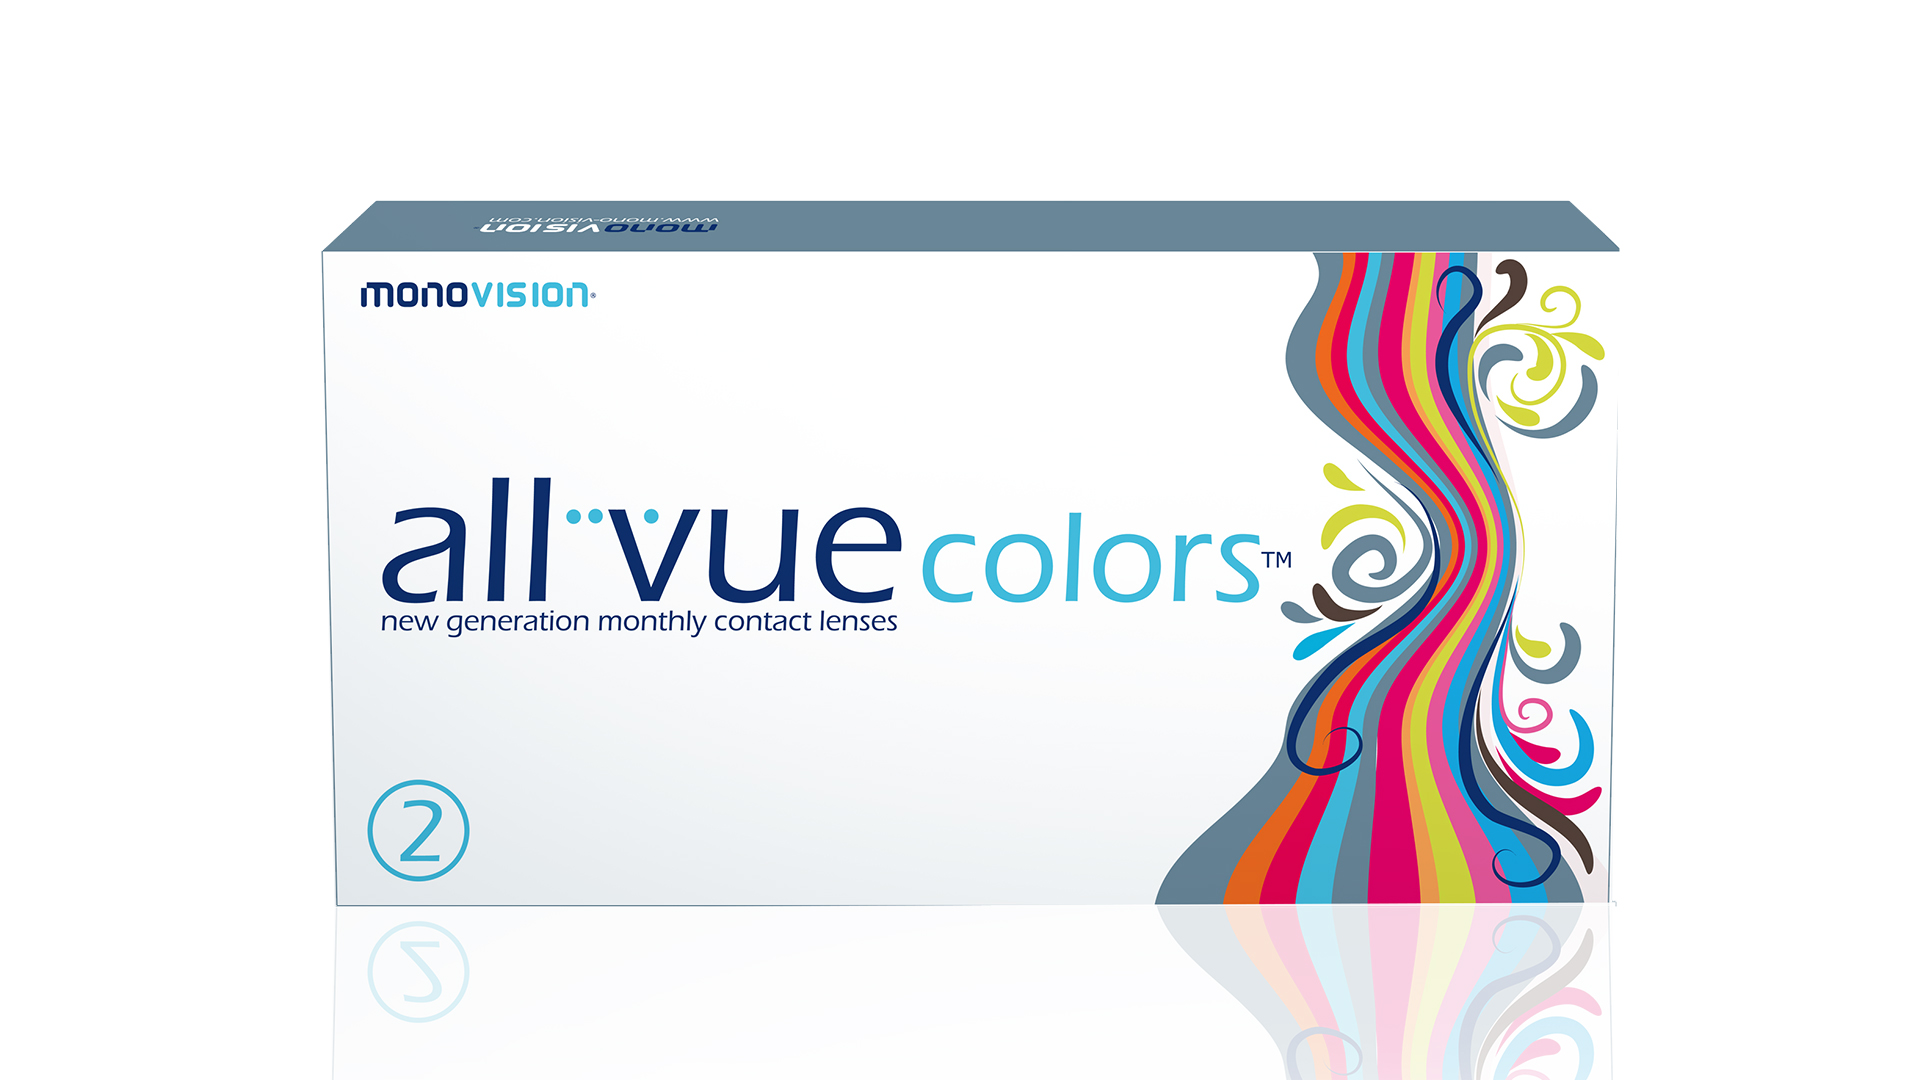 All Vue Colors